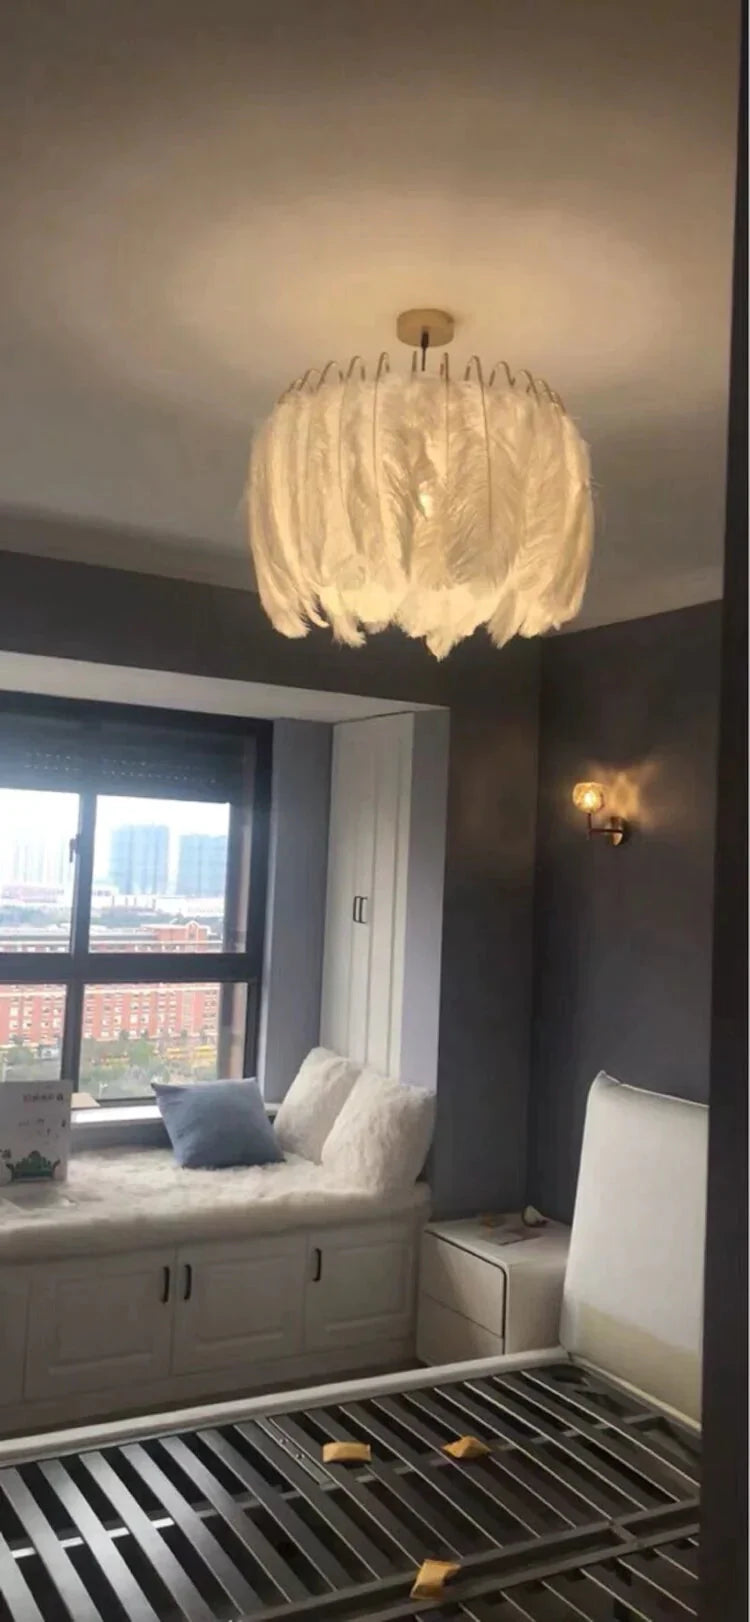 Modern Nordic Fairy Feather Chandelier Lamp Loft Pendant Lights Living Suspension Lighting Fixtures